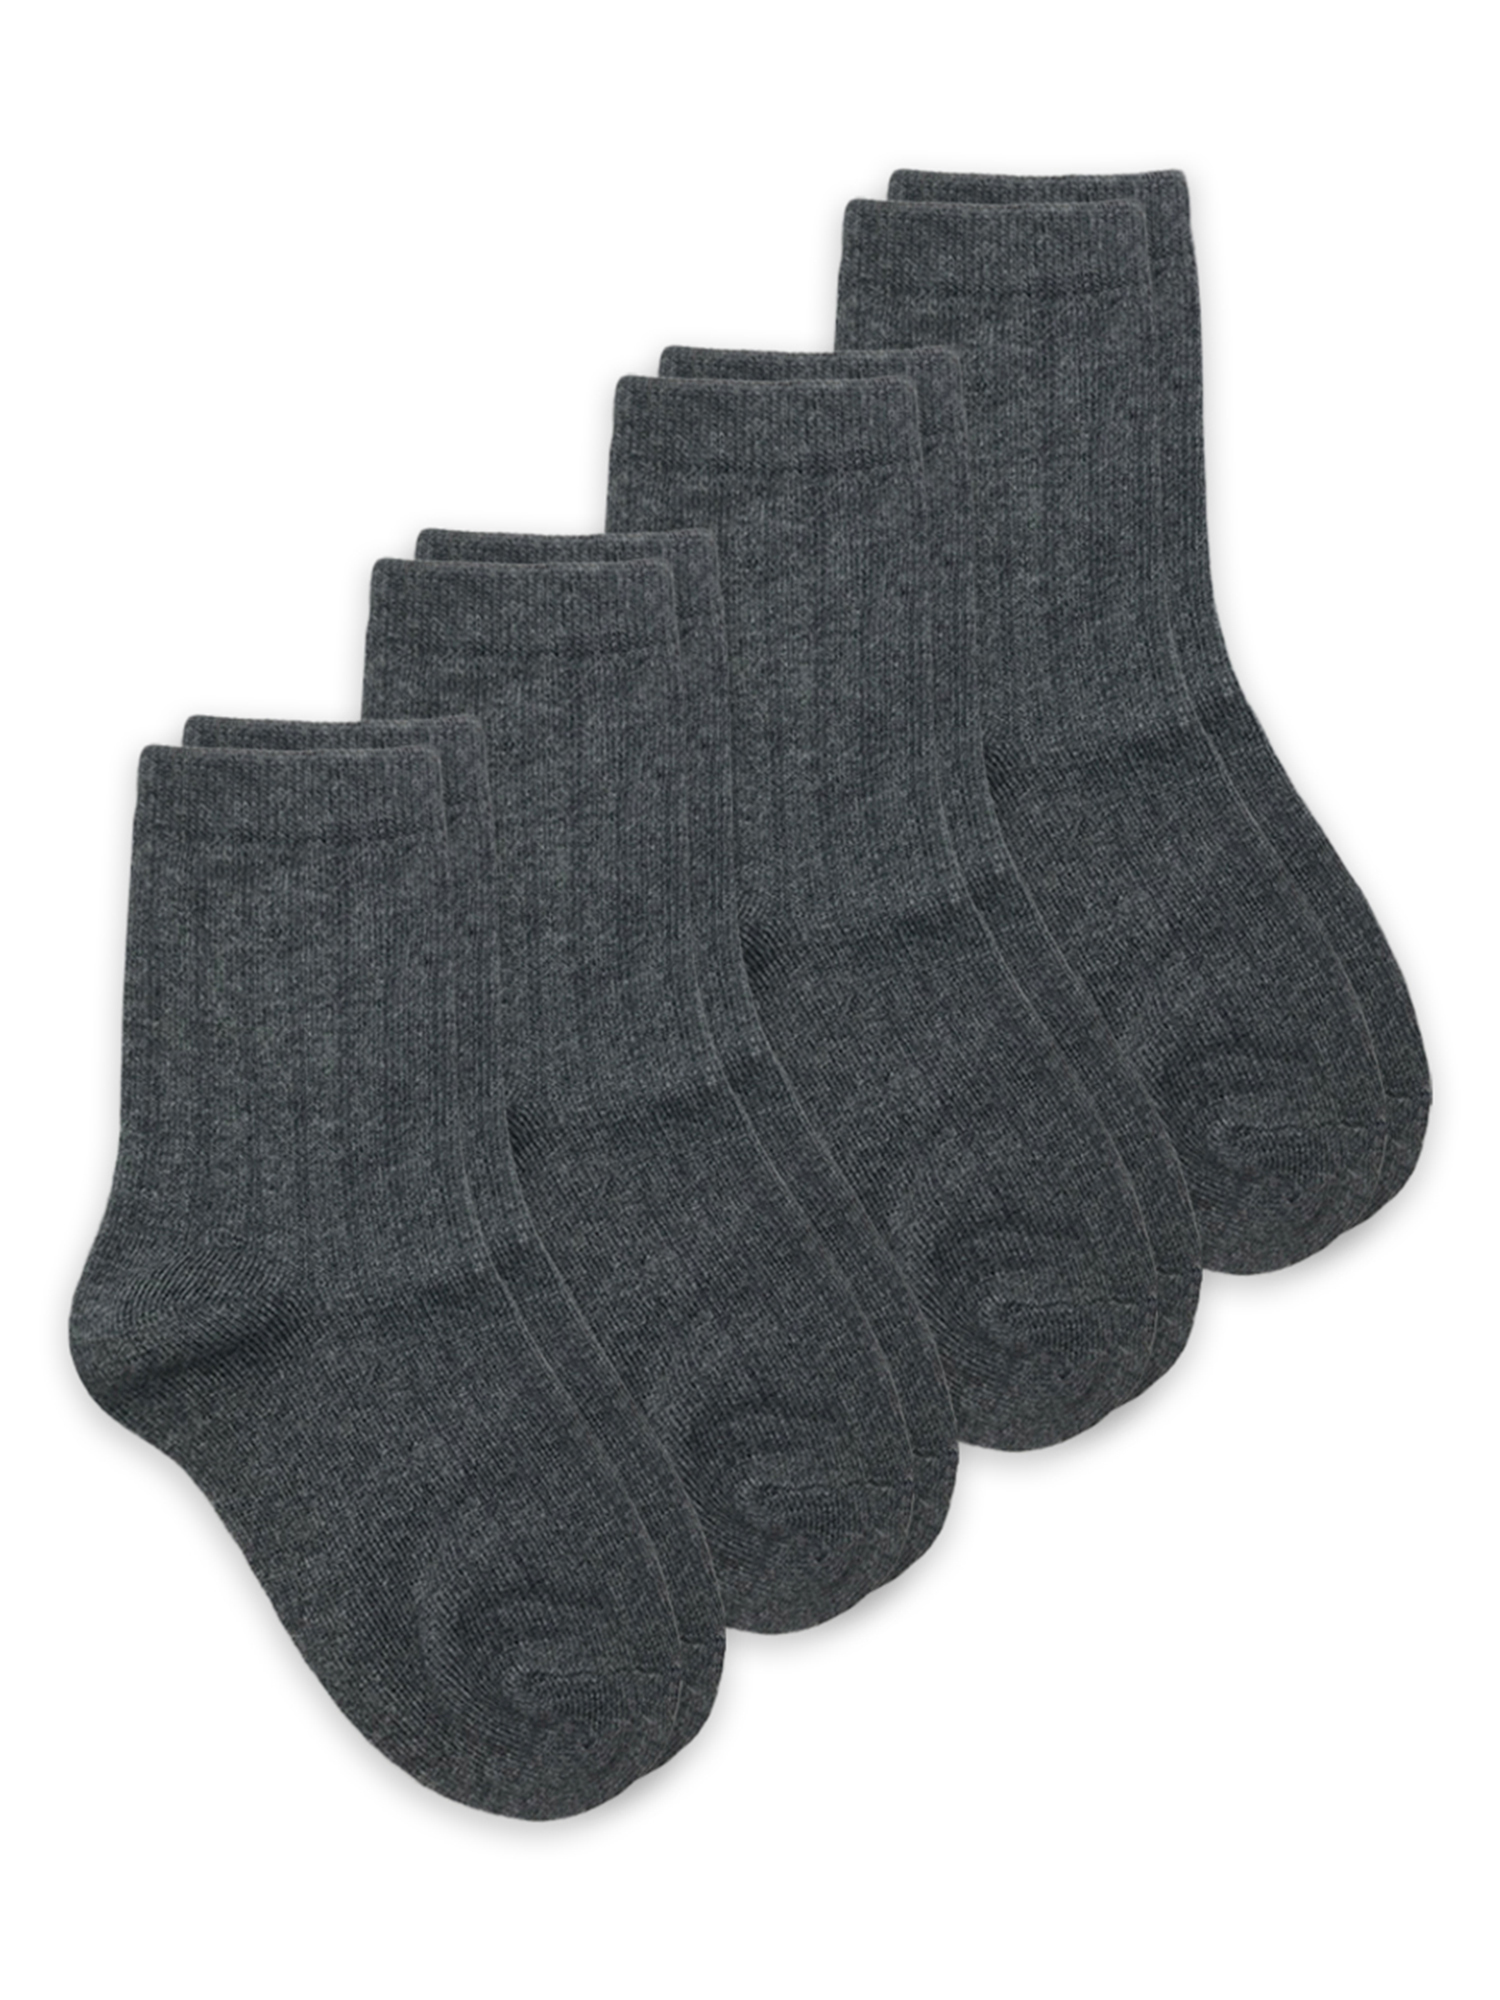 Jefferies Socks Kids Socks, 4 Pack School Uniform Rib Cotton Crew Socks (Little Kids & Big Kids) - image 1 of 2